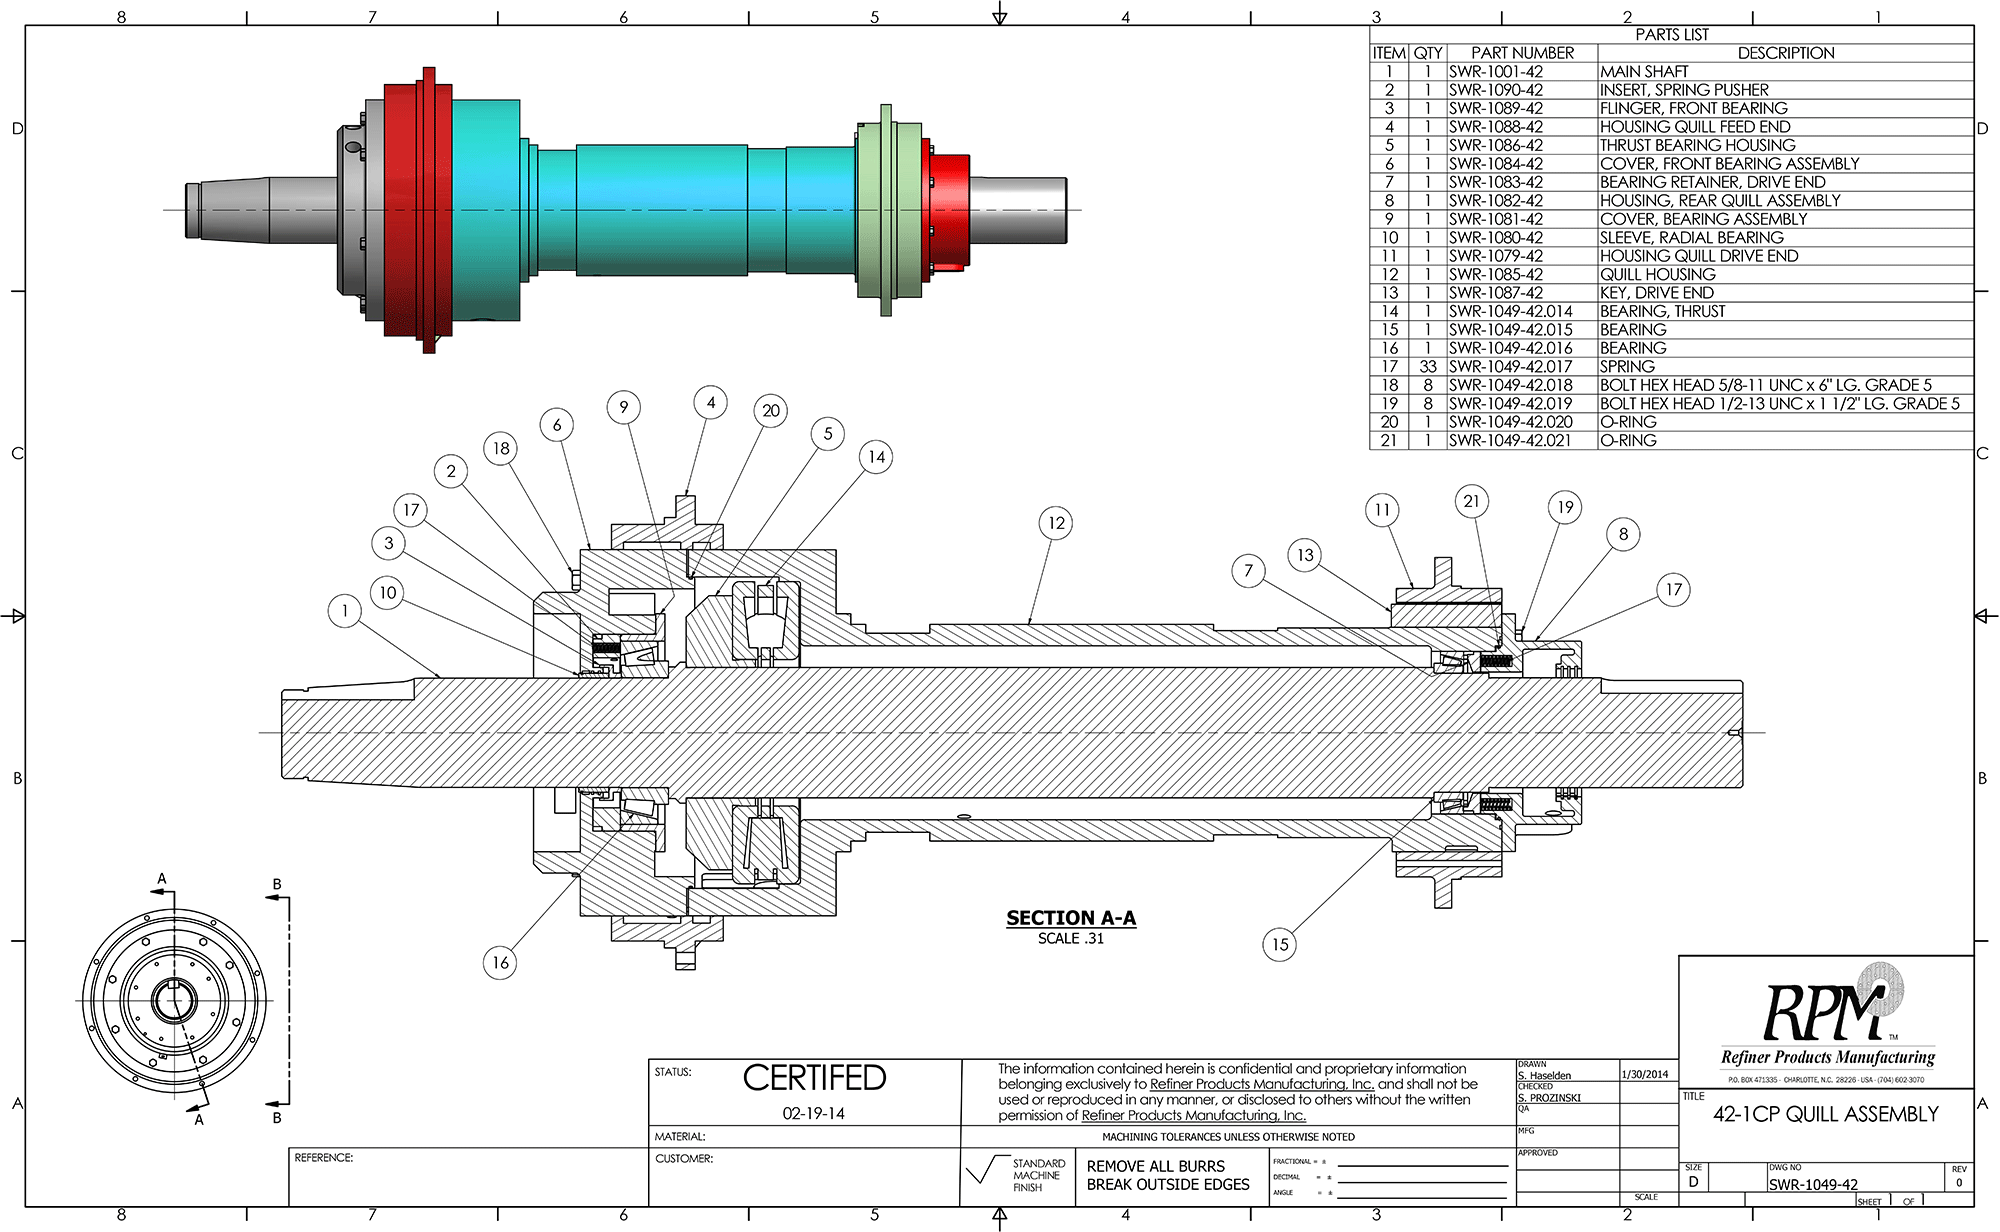 SWR-1049-42